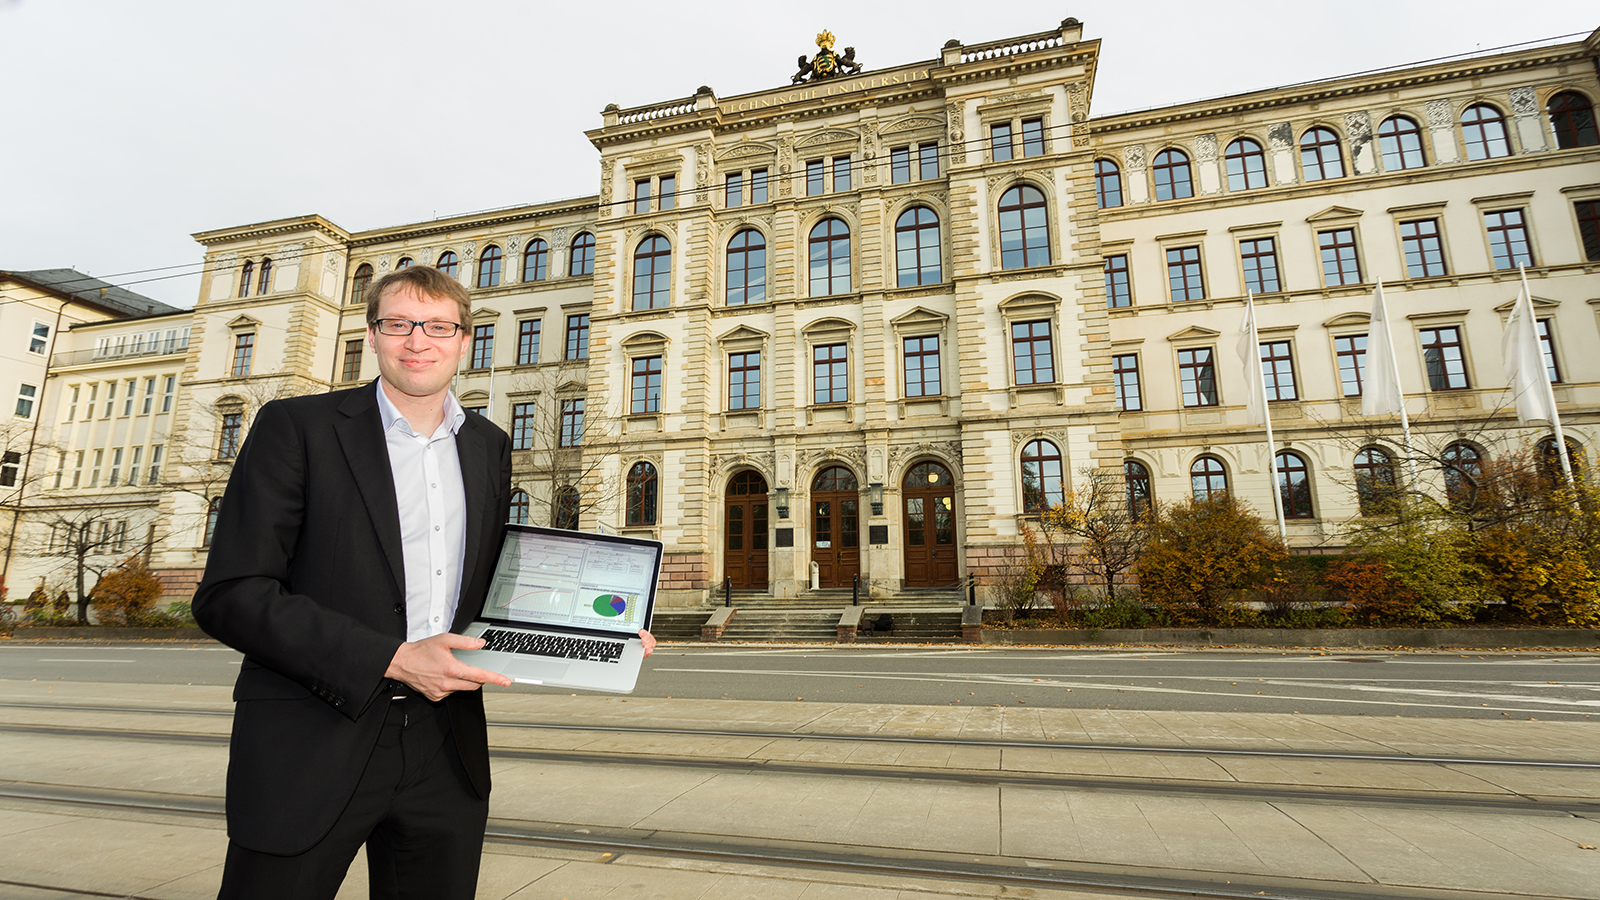 Masters in Computer Science in Germany (web engineering)TU CHEMNITZ 